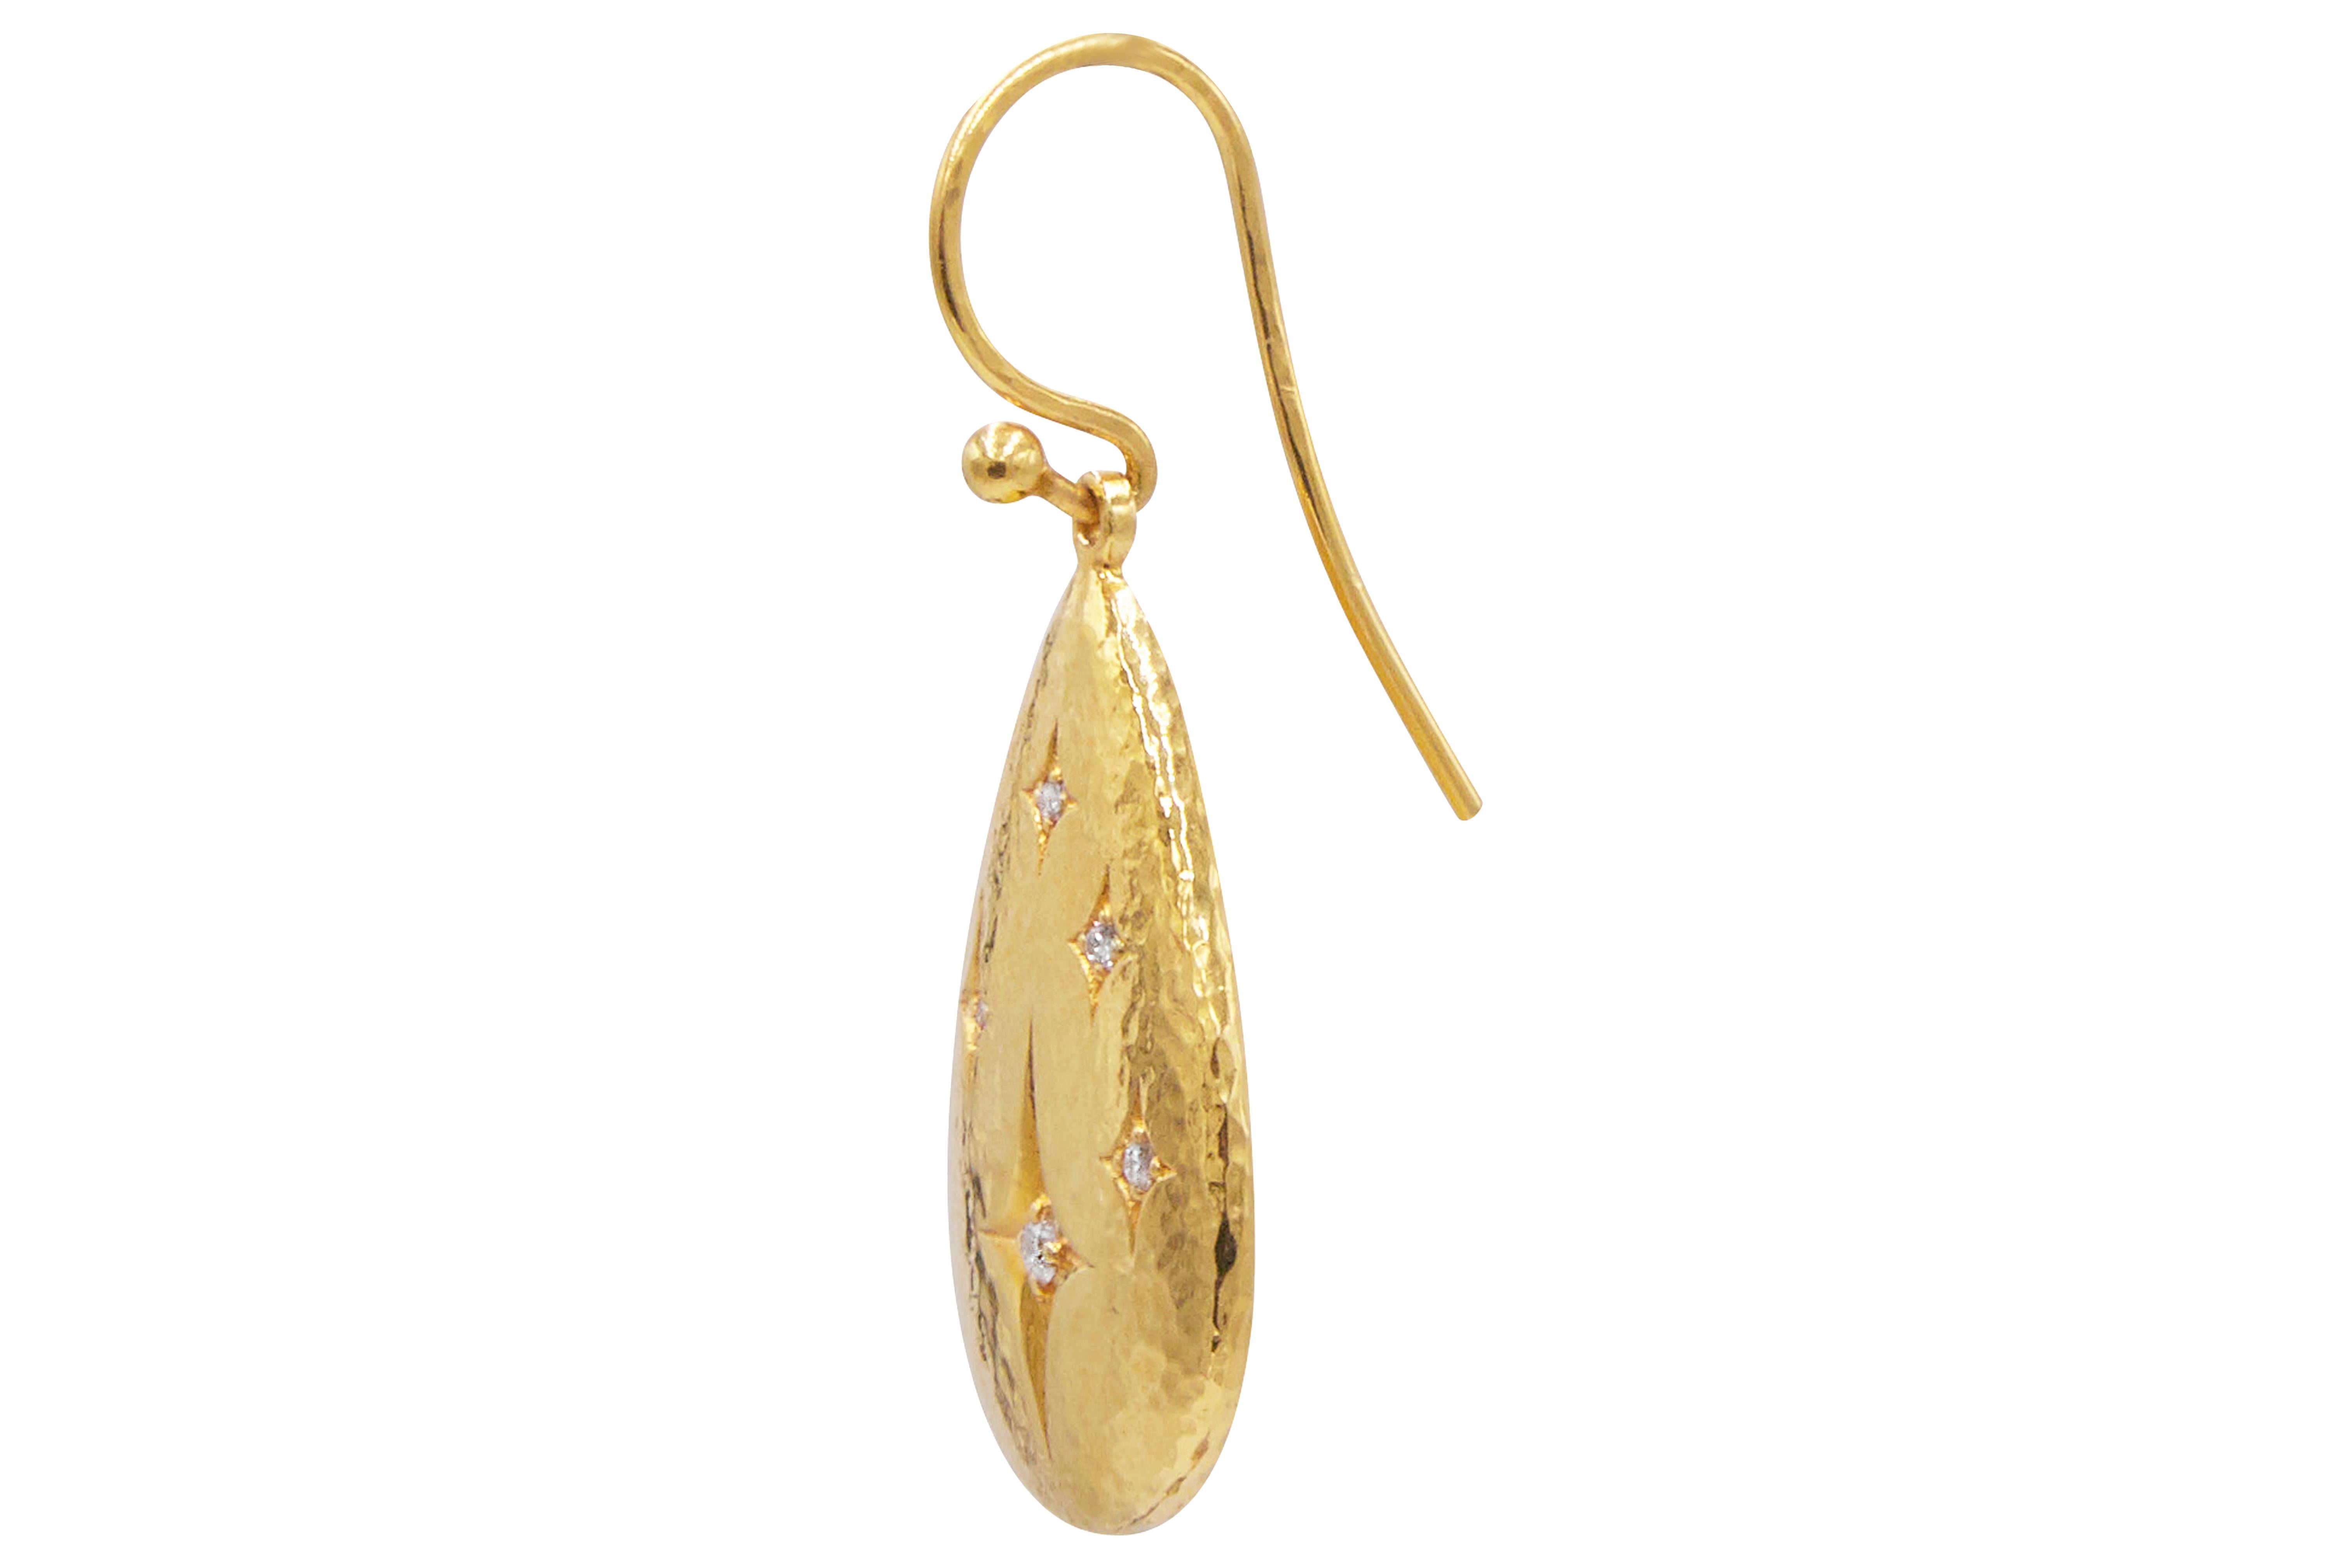 GURHAN 22 Karat hammered yellow gold Starlight 16mm wide pear shape drop earrings featuring (10) 1.20-1.60mm brilliant white diamonds, 0.10cts. 1.5